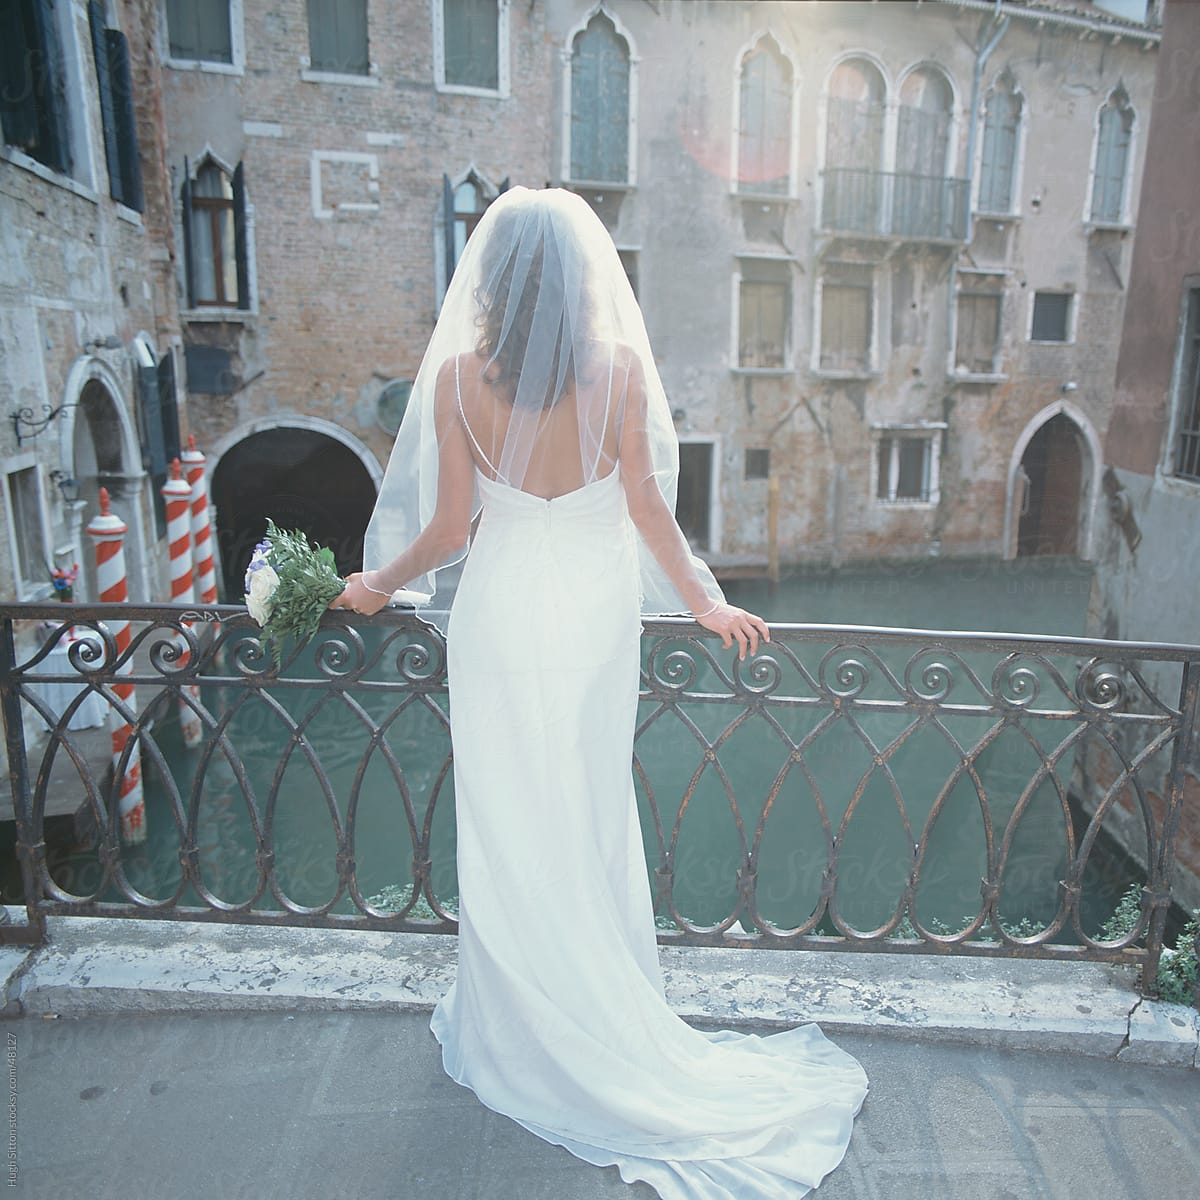 Bride in wedding dress on bridge overlooking canal. Venice. Italy.